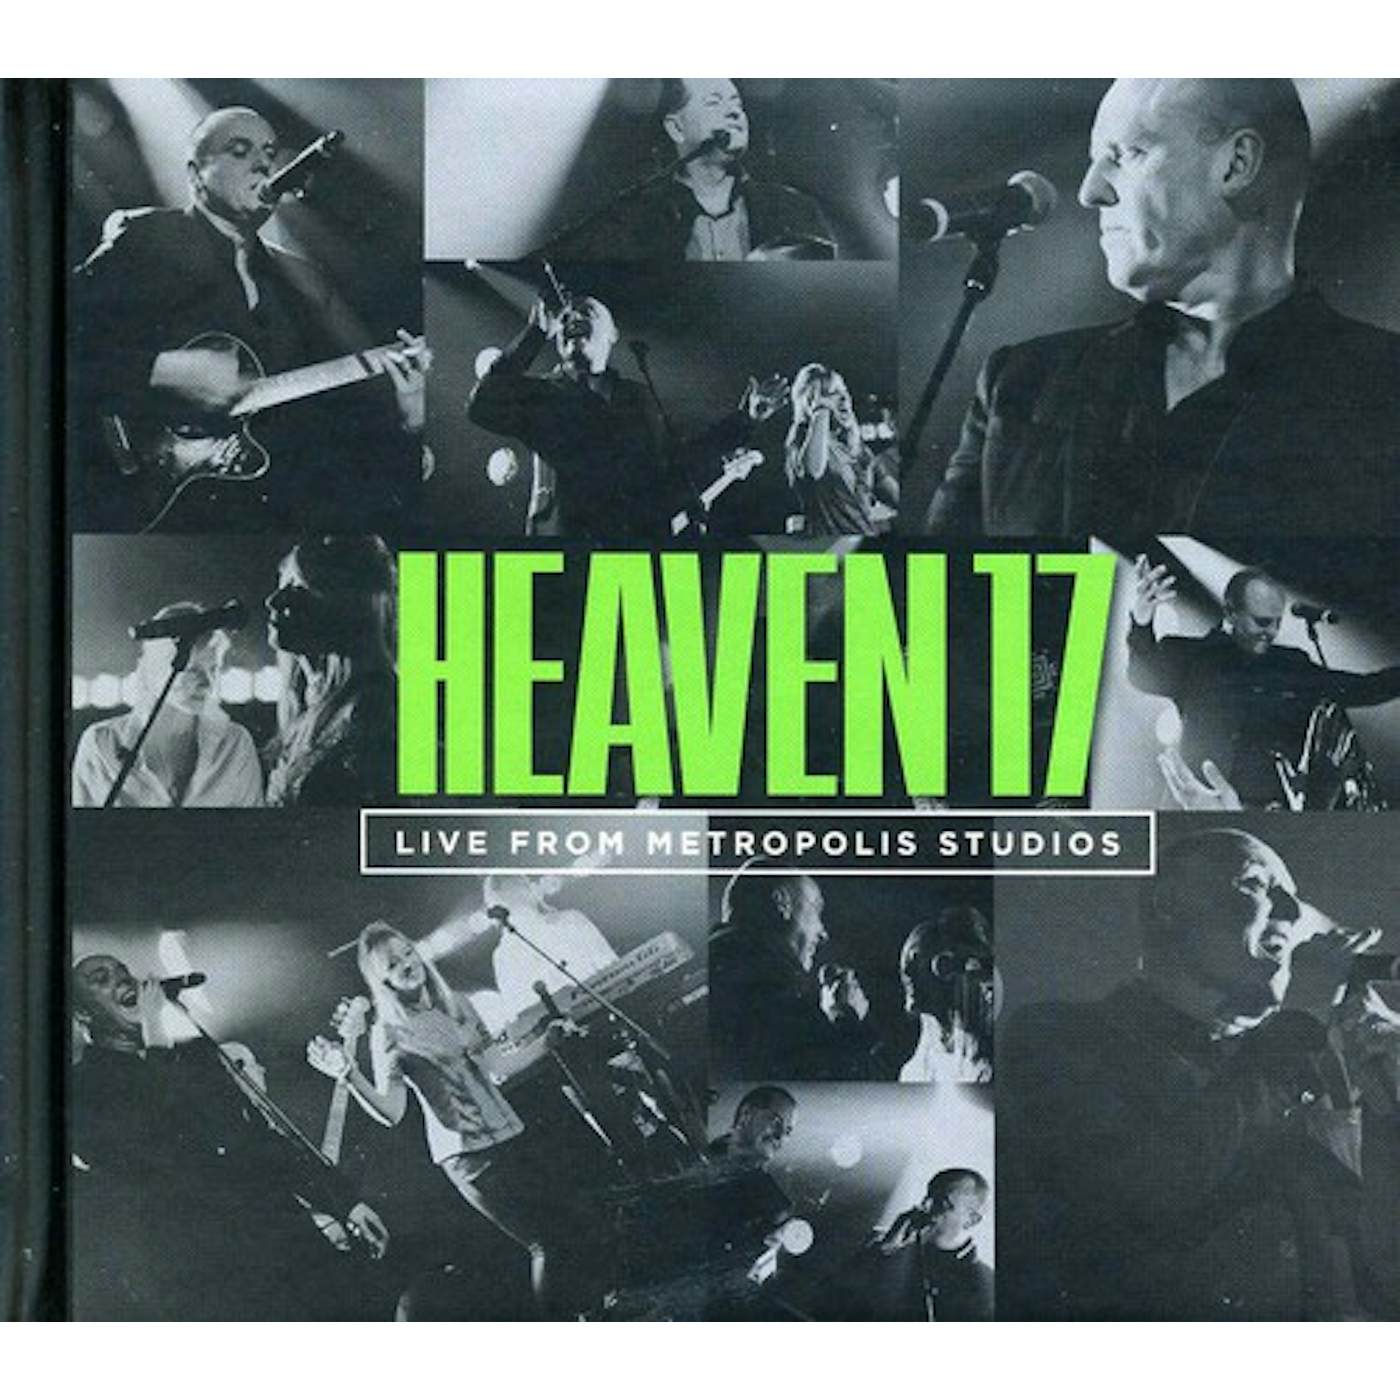 Heaven 17 LIVE FROM METROPOLIS STUDIOS CD